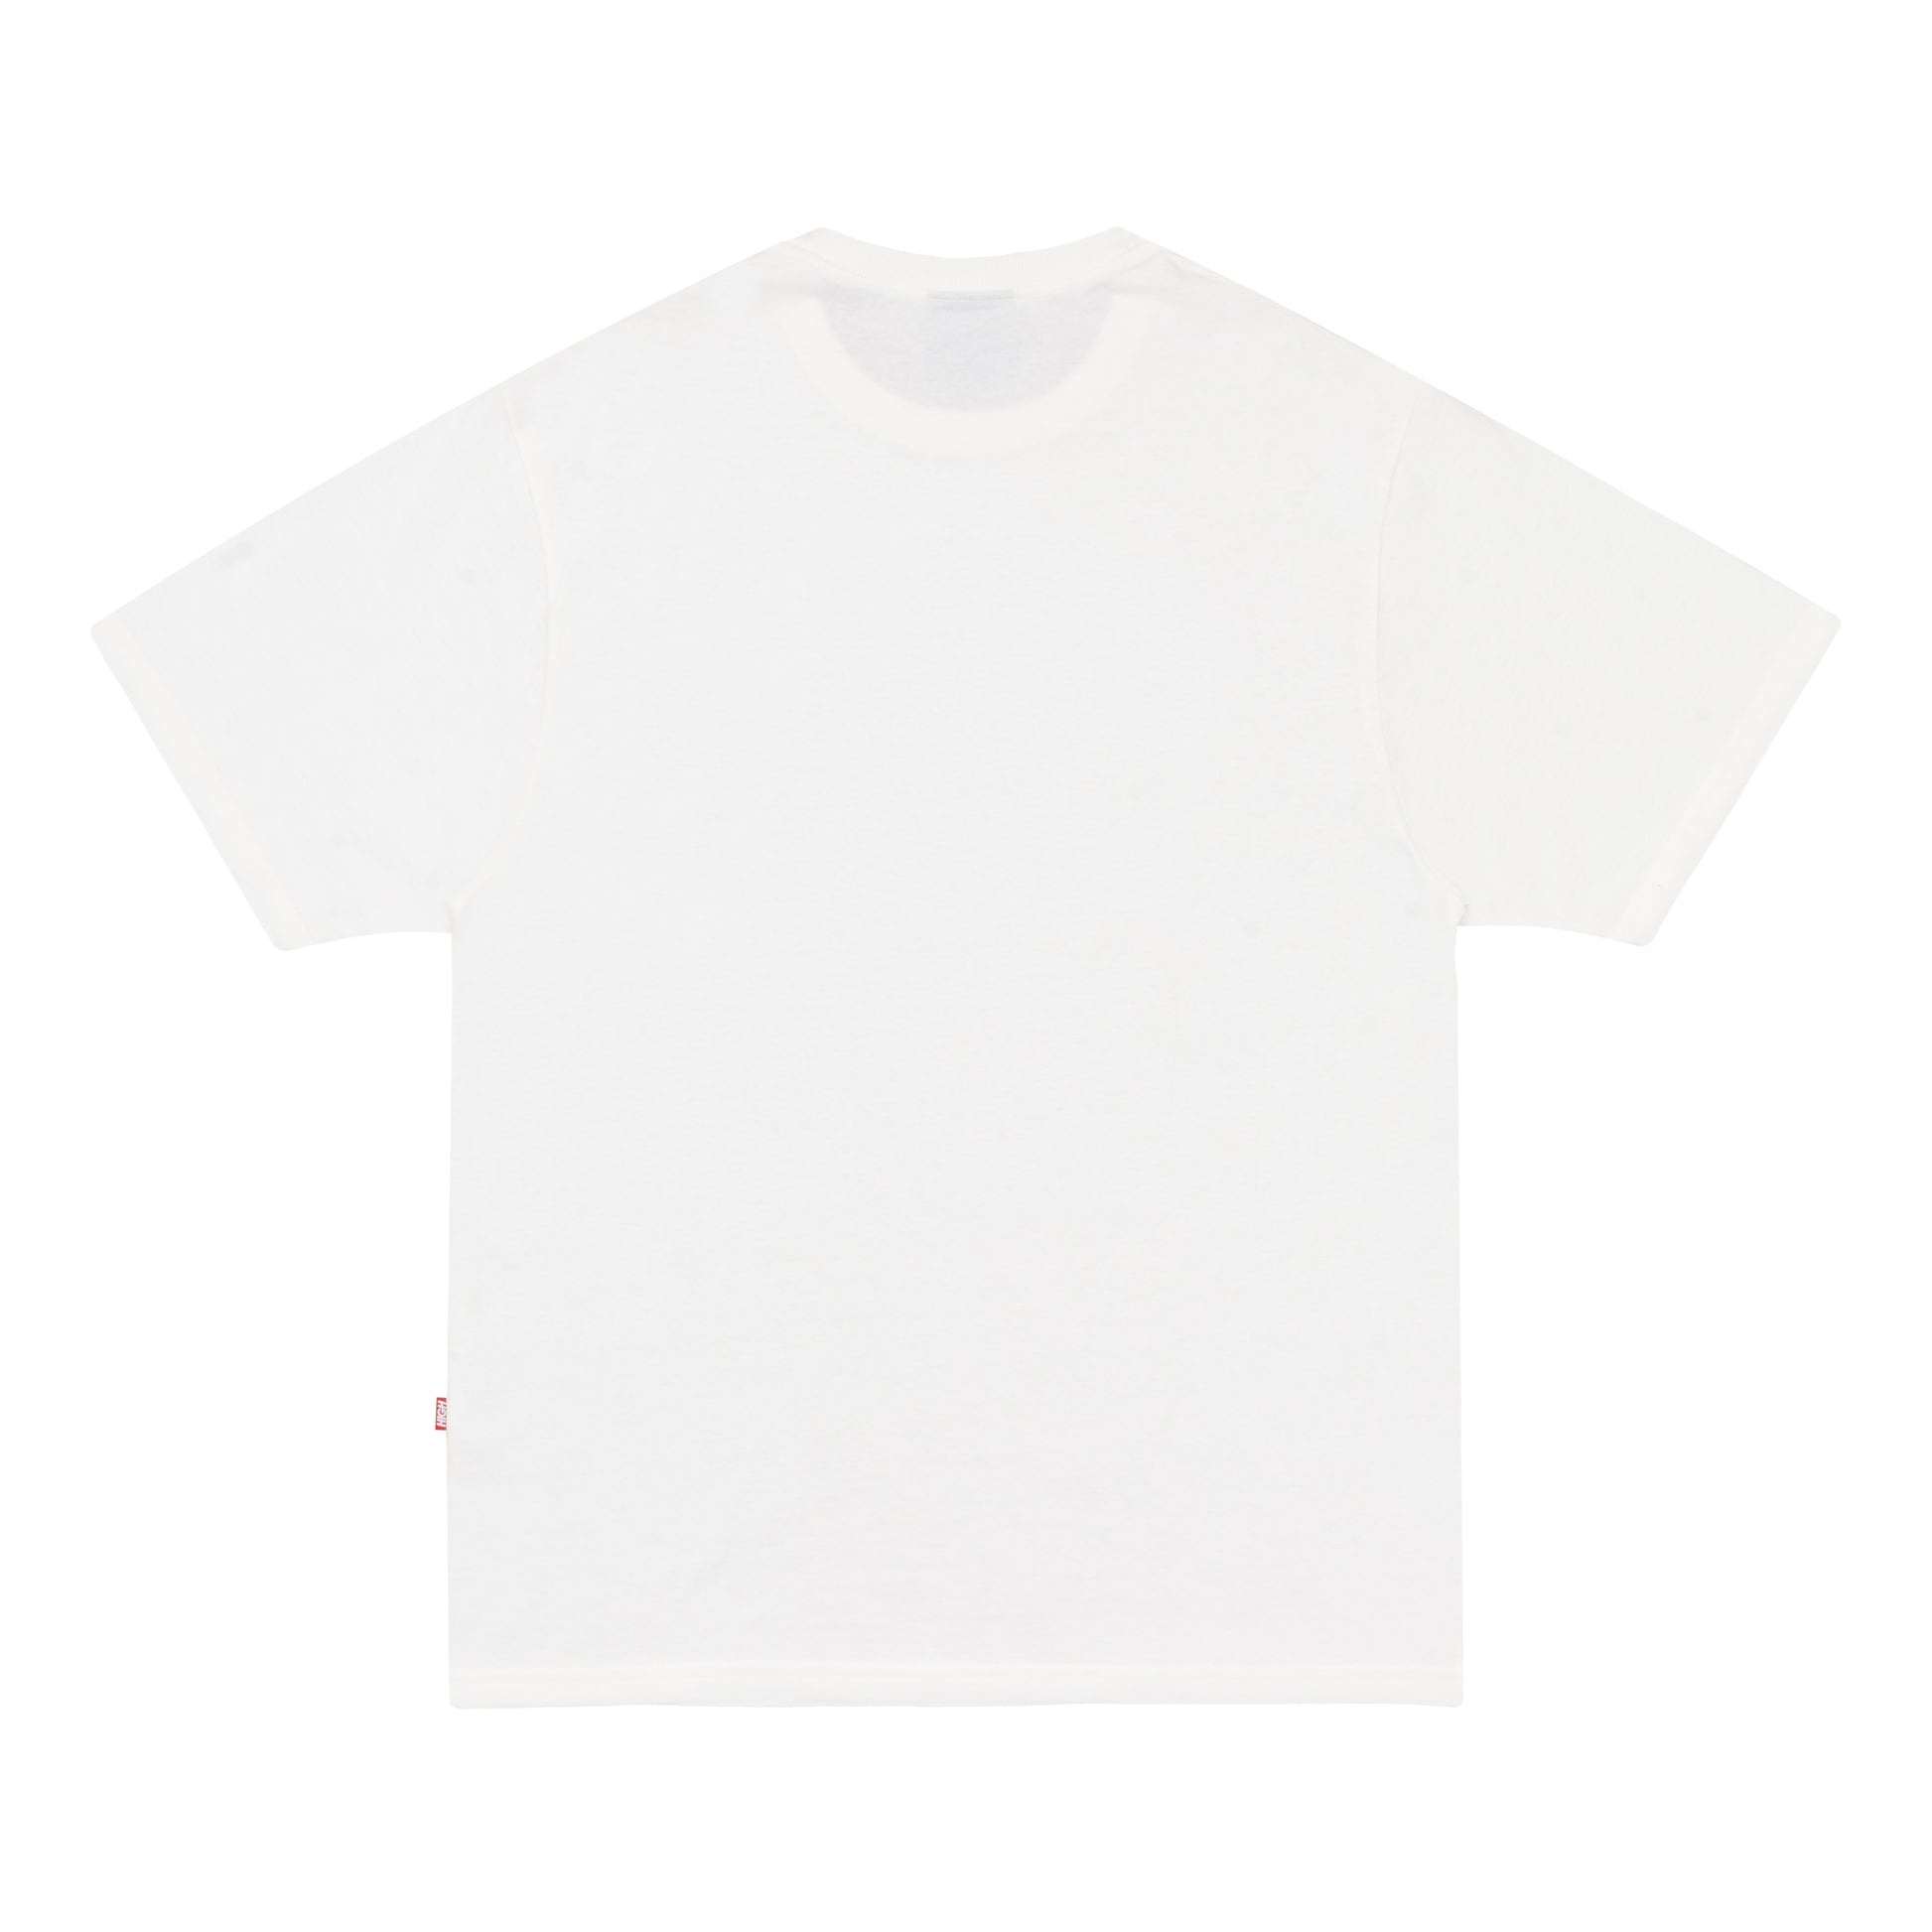 HIGH - Camiseta Comet "White" - THE GAME